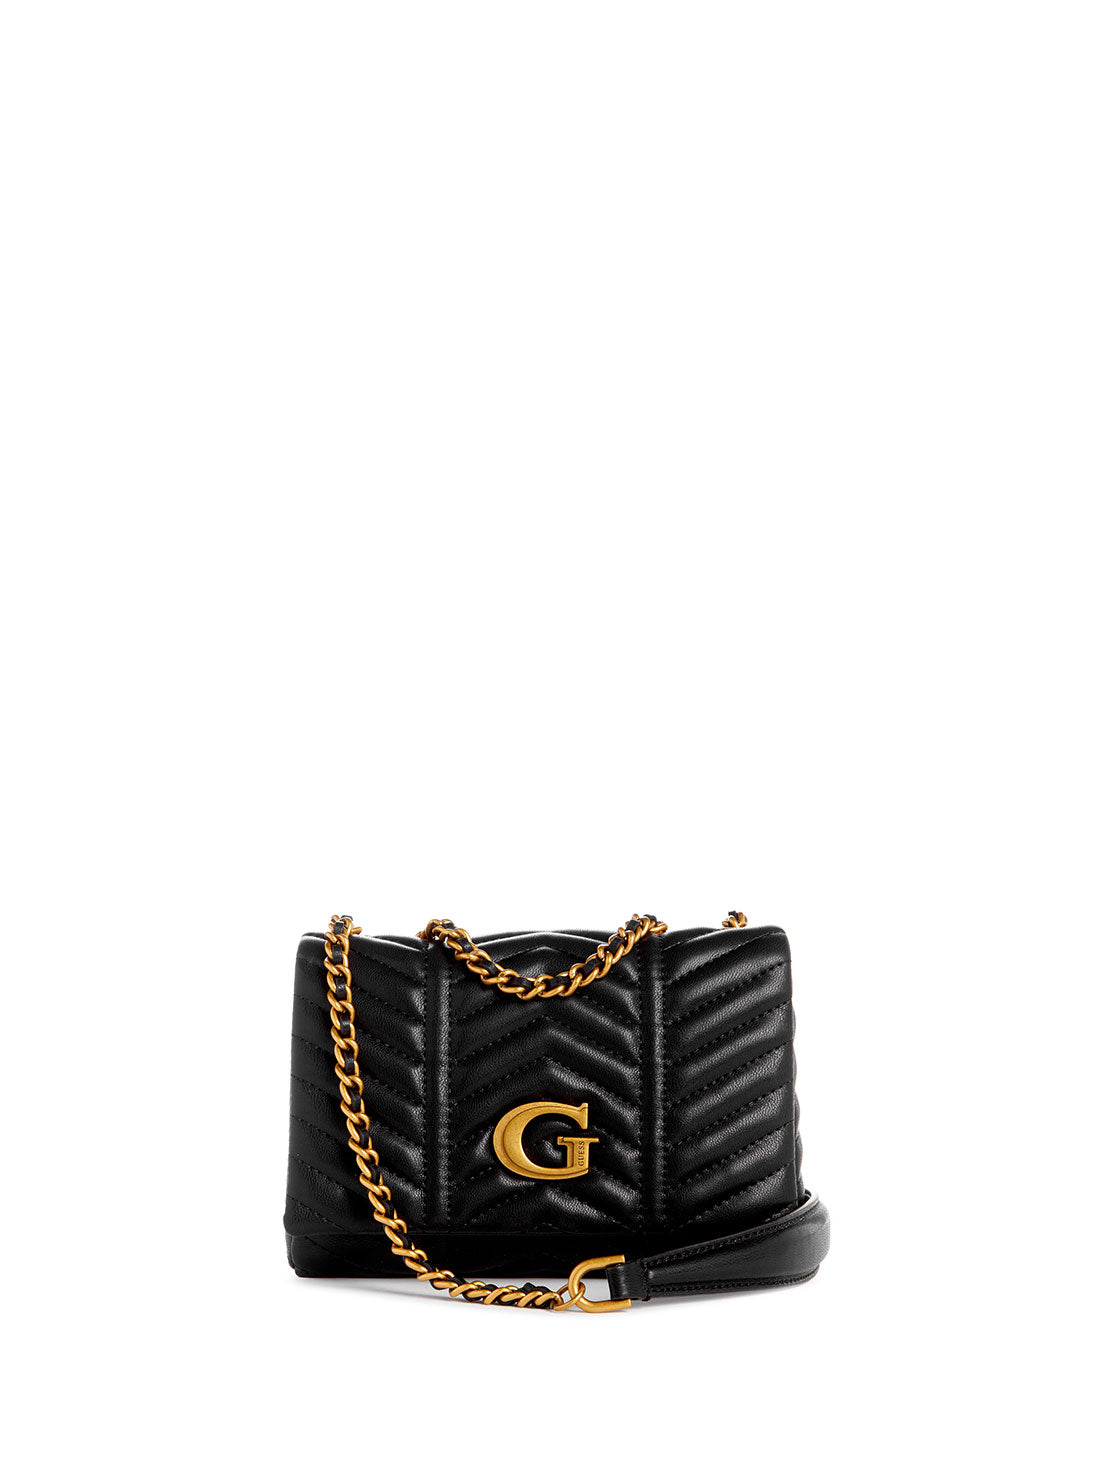 GUESS Women's Black Lovide Mini Crossbody Bag QB897678 Front View